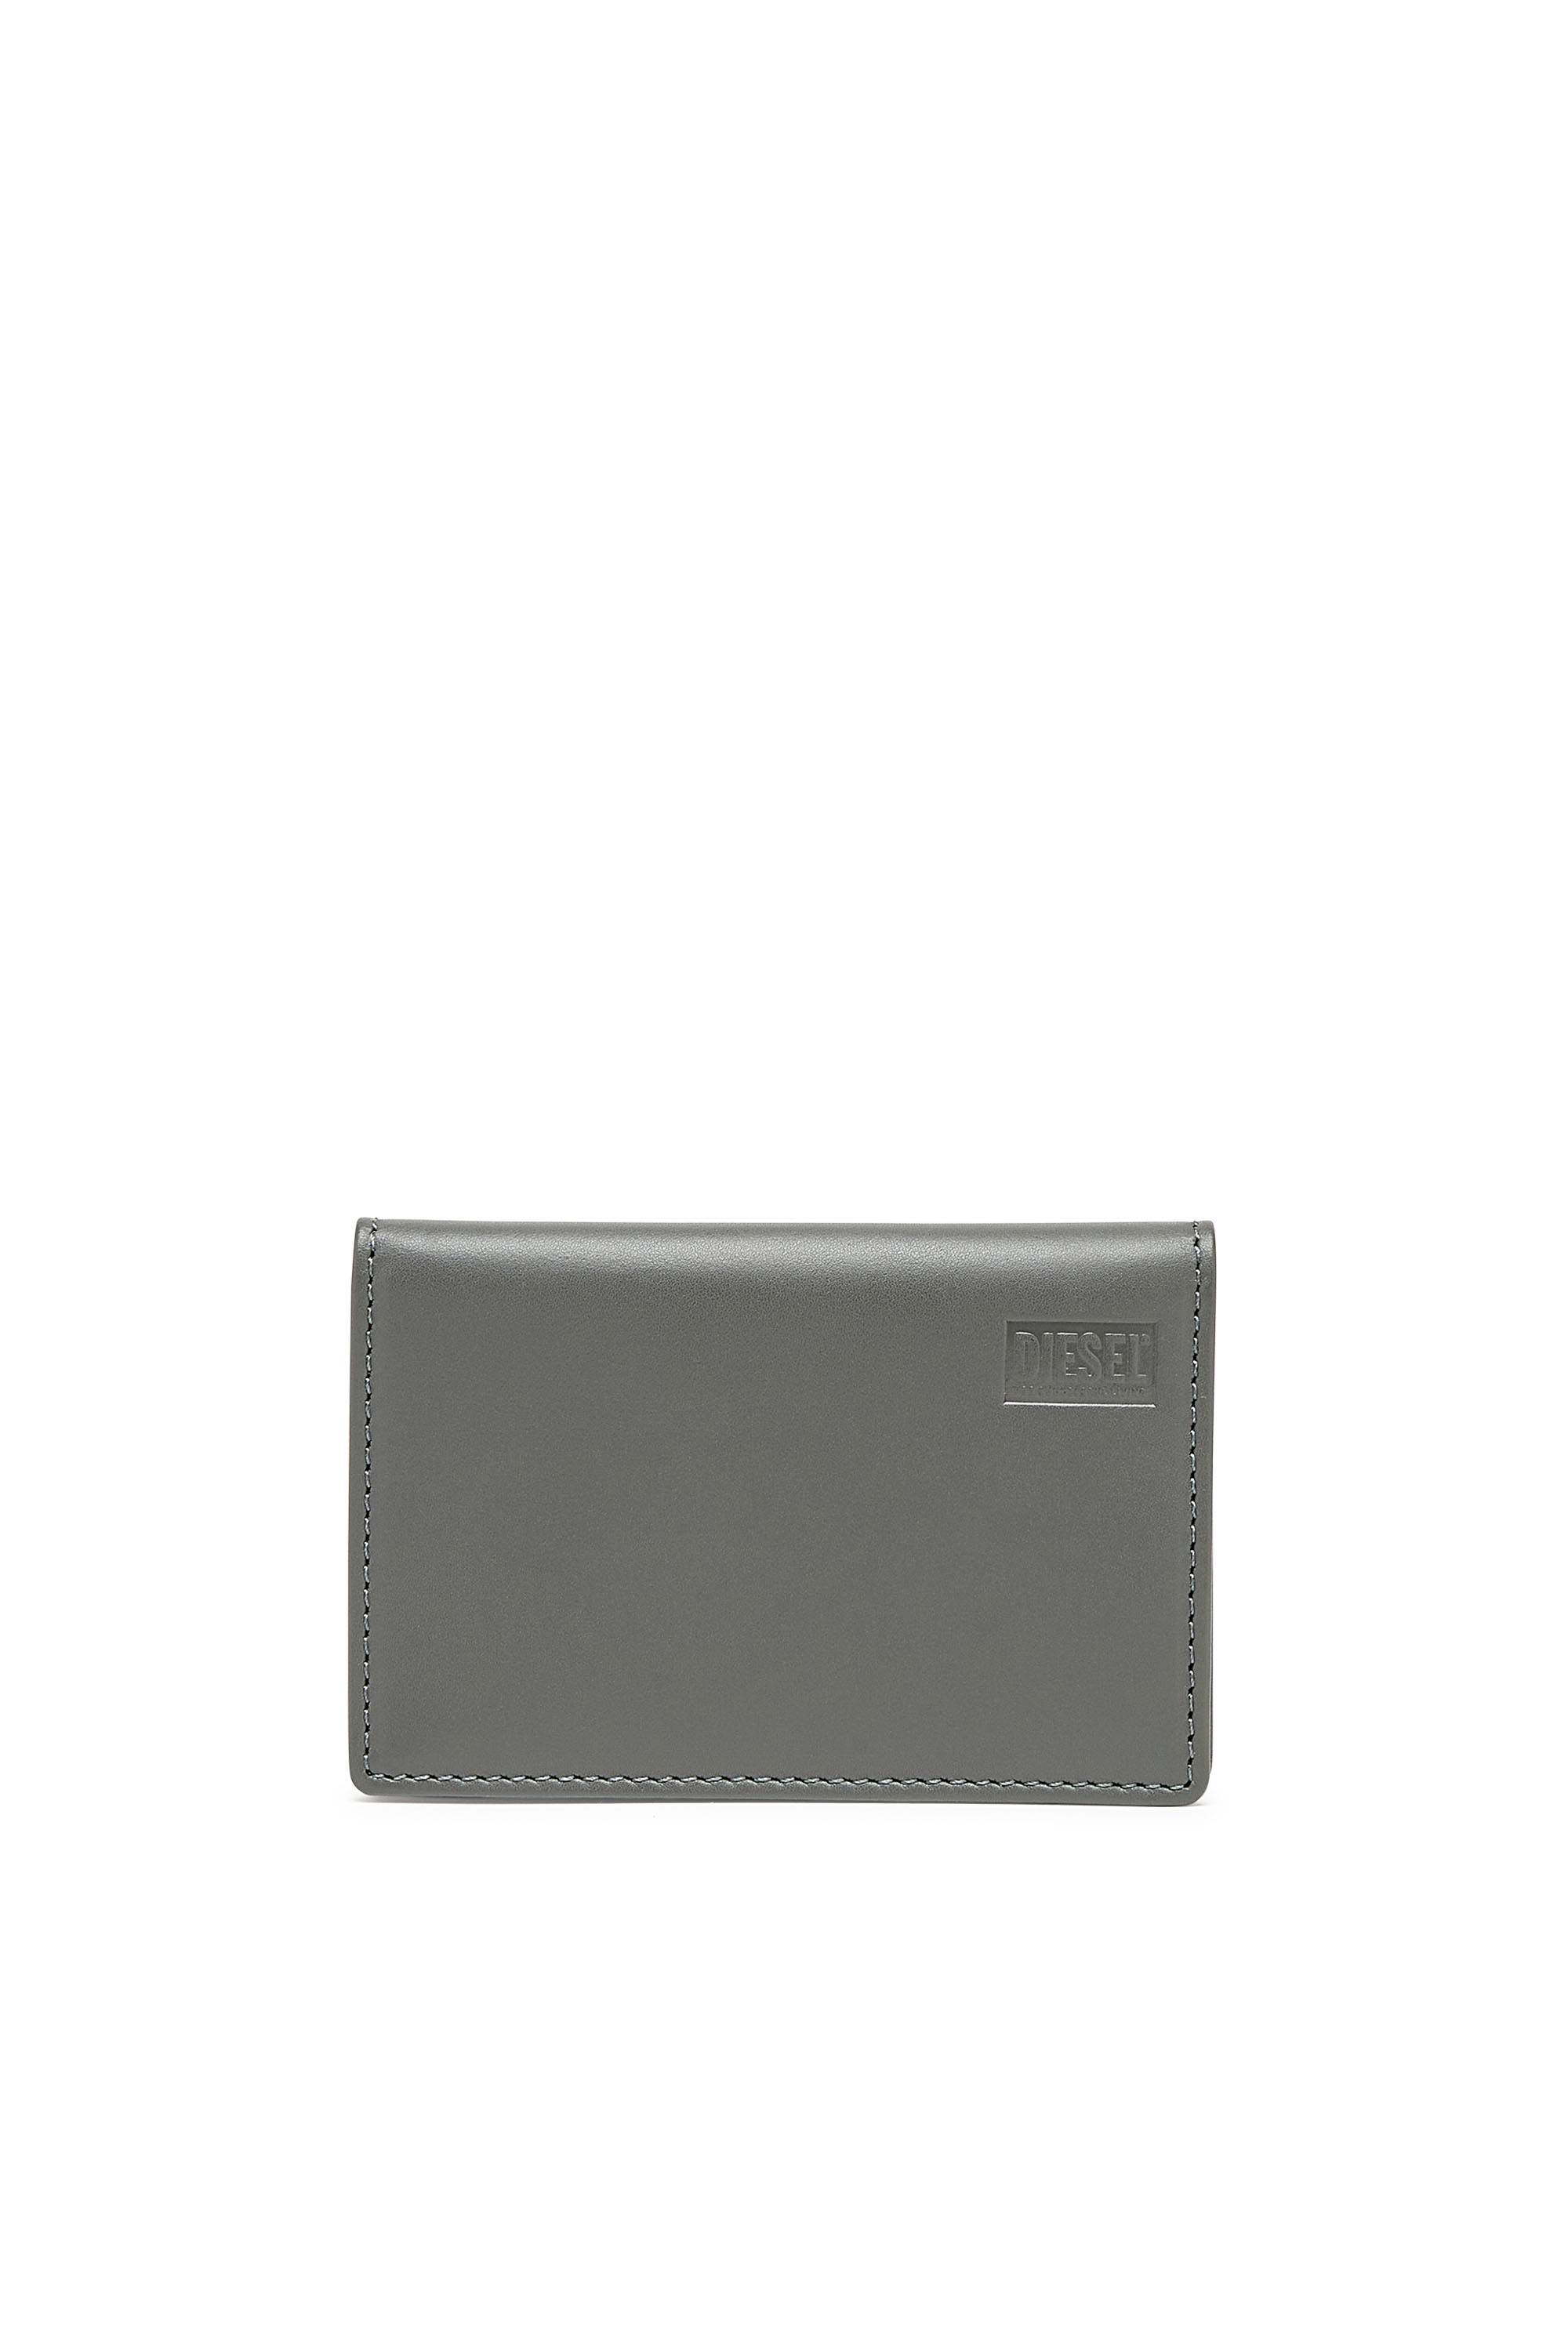 Diesel - BI-FOLD CARD HOLDER, Grey/Green - Image 1